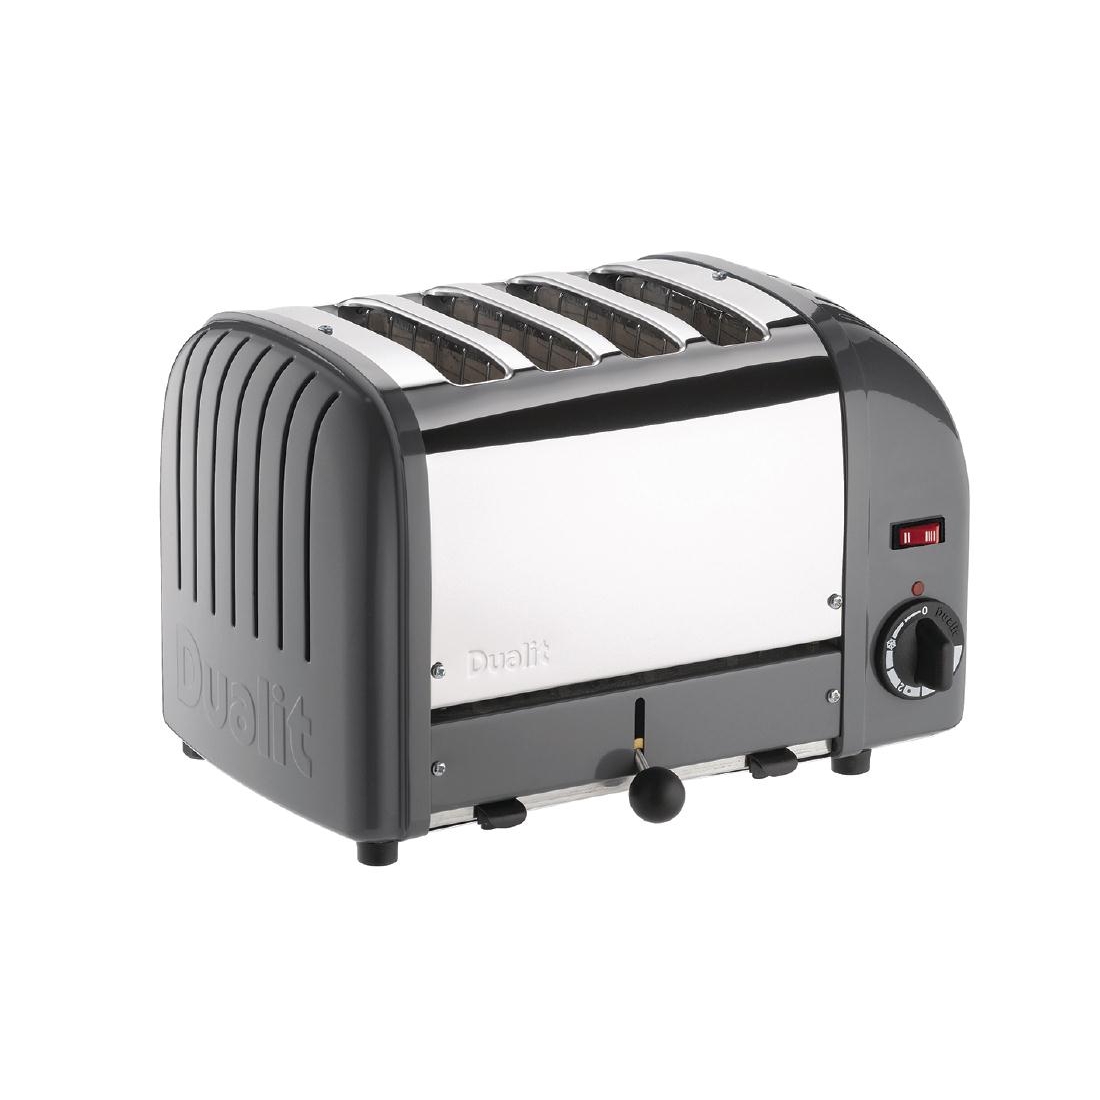 Dualit 4 Slice Vario Toaster Cobble Grey 40514